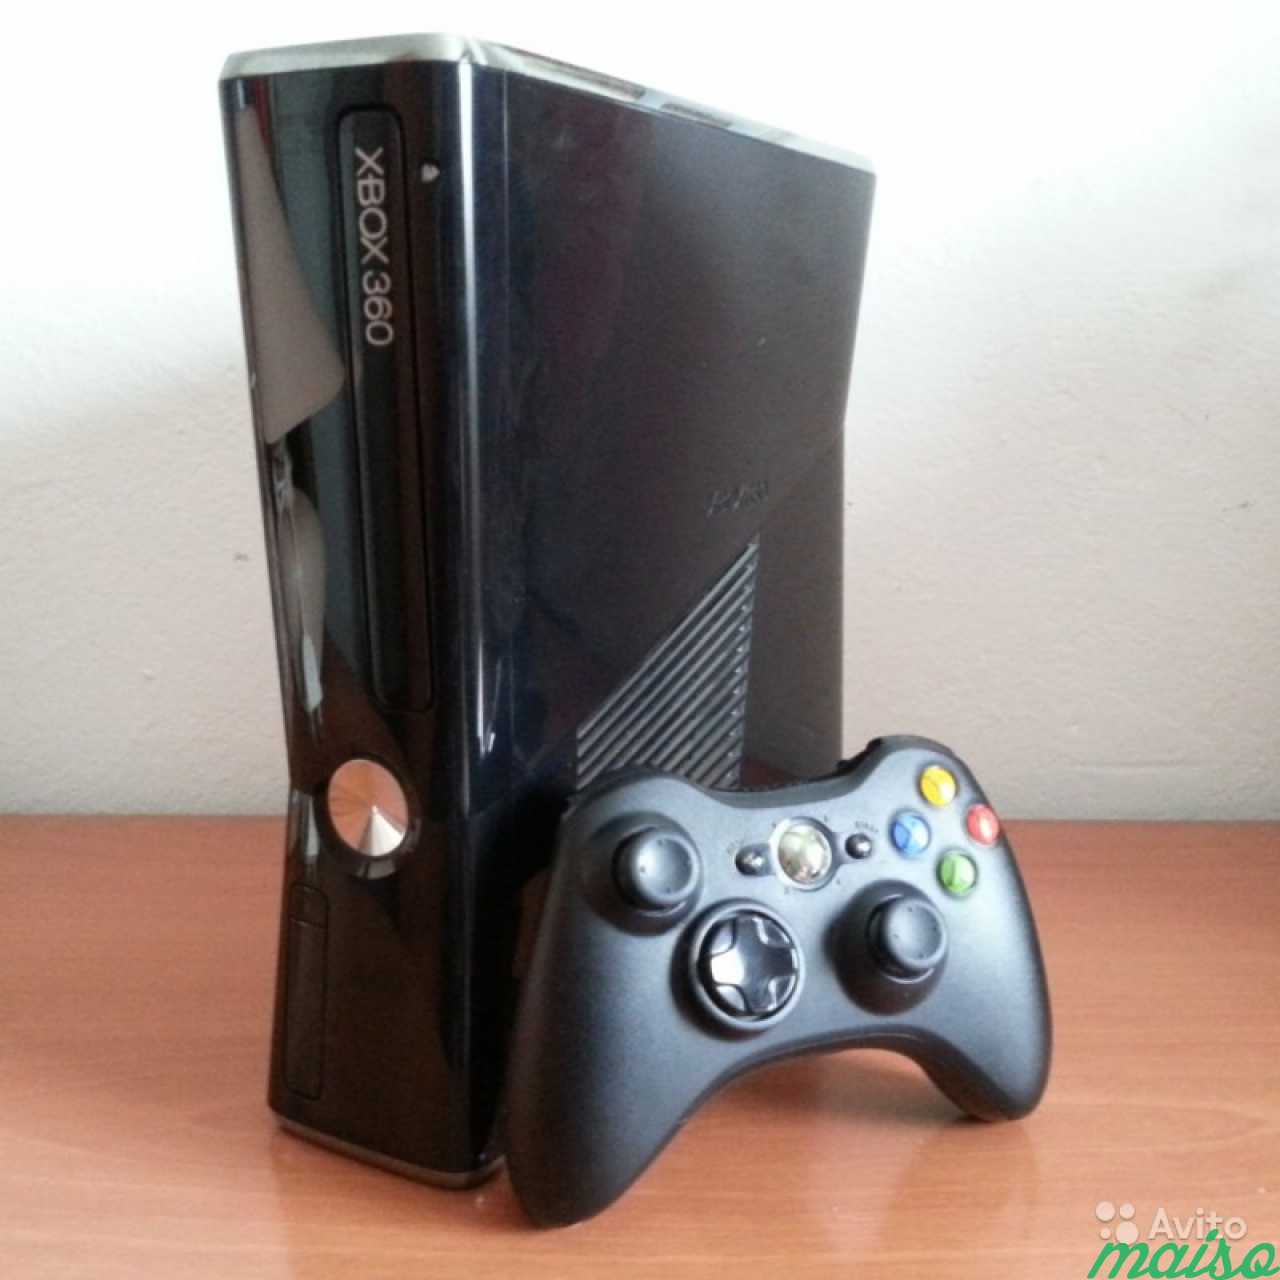 Фрибут 500 рублей. Xbox 360 Slim. Xbox 360 Slim freeboot. Xbox 360 Slim 360. Xbox 360 Slim 250gb.